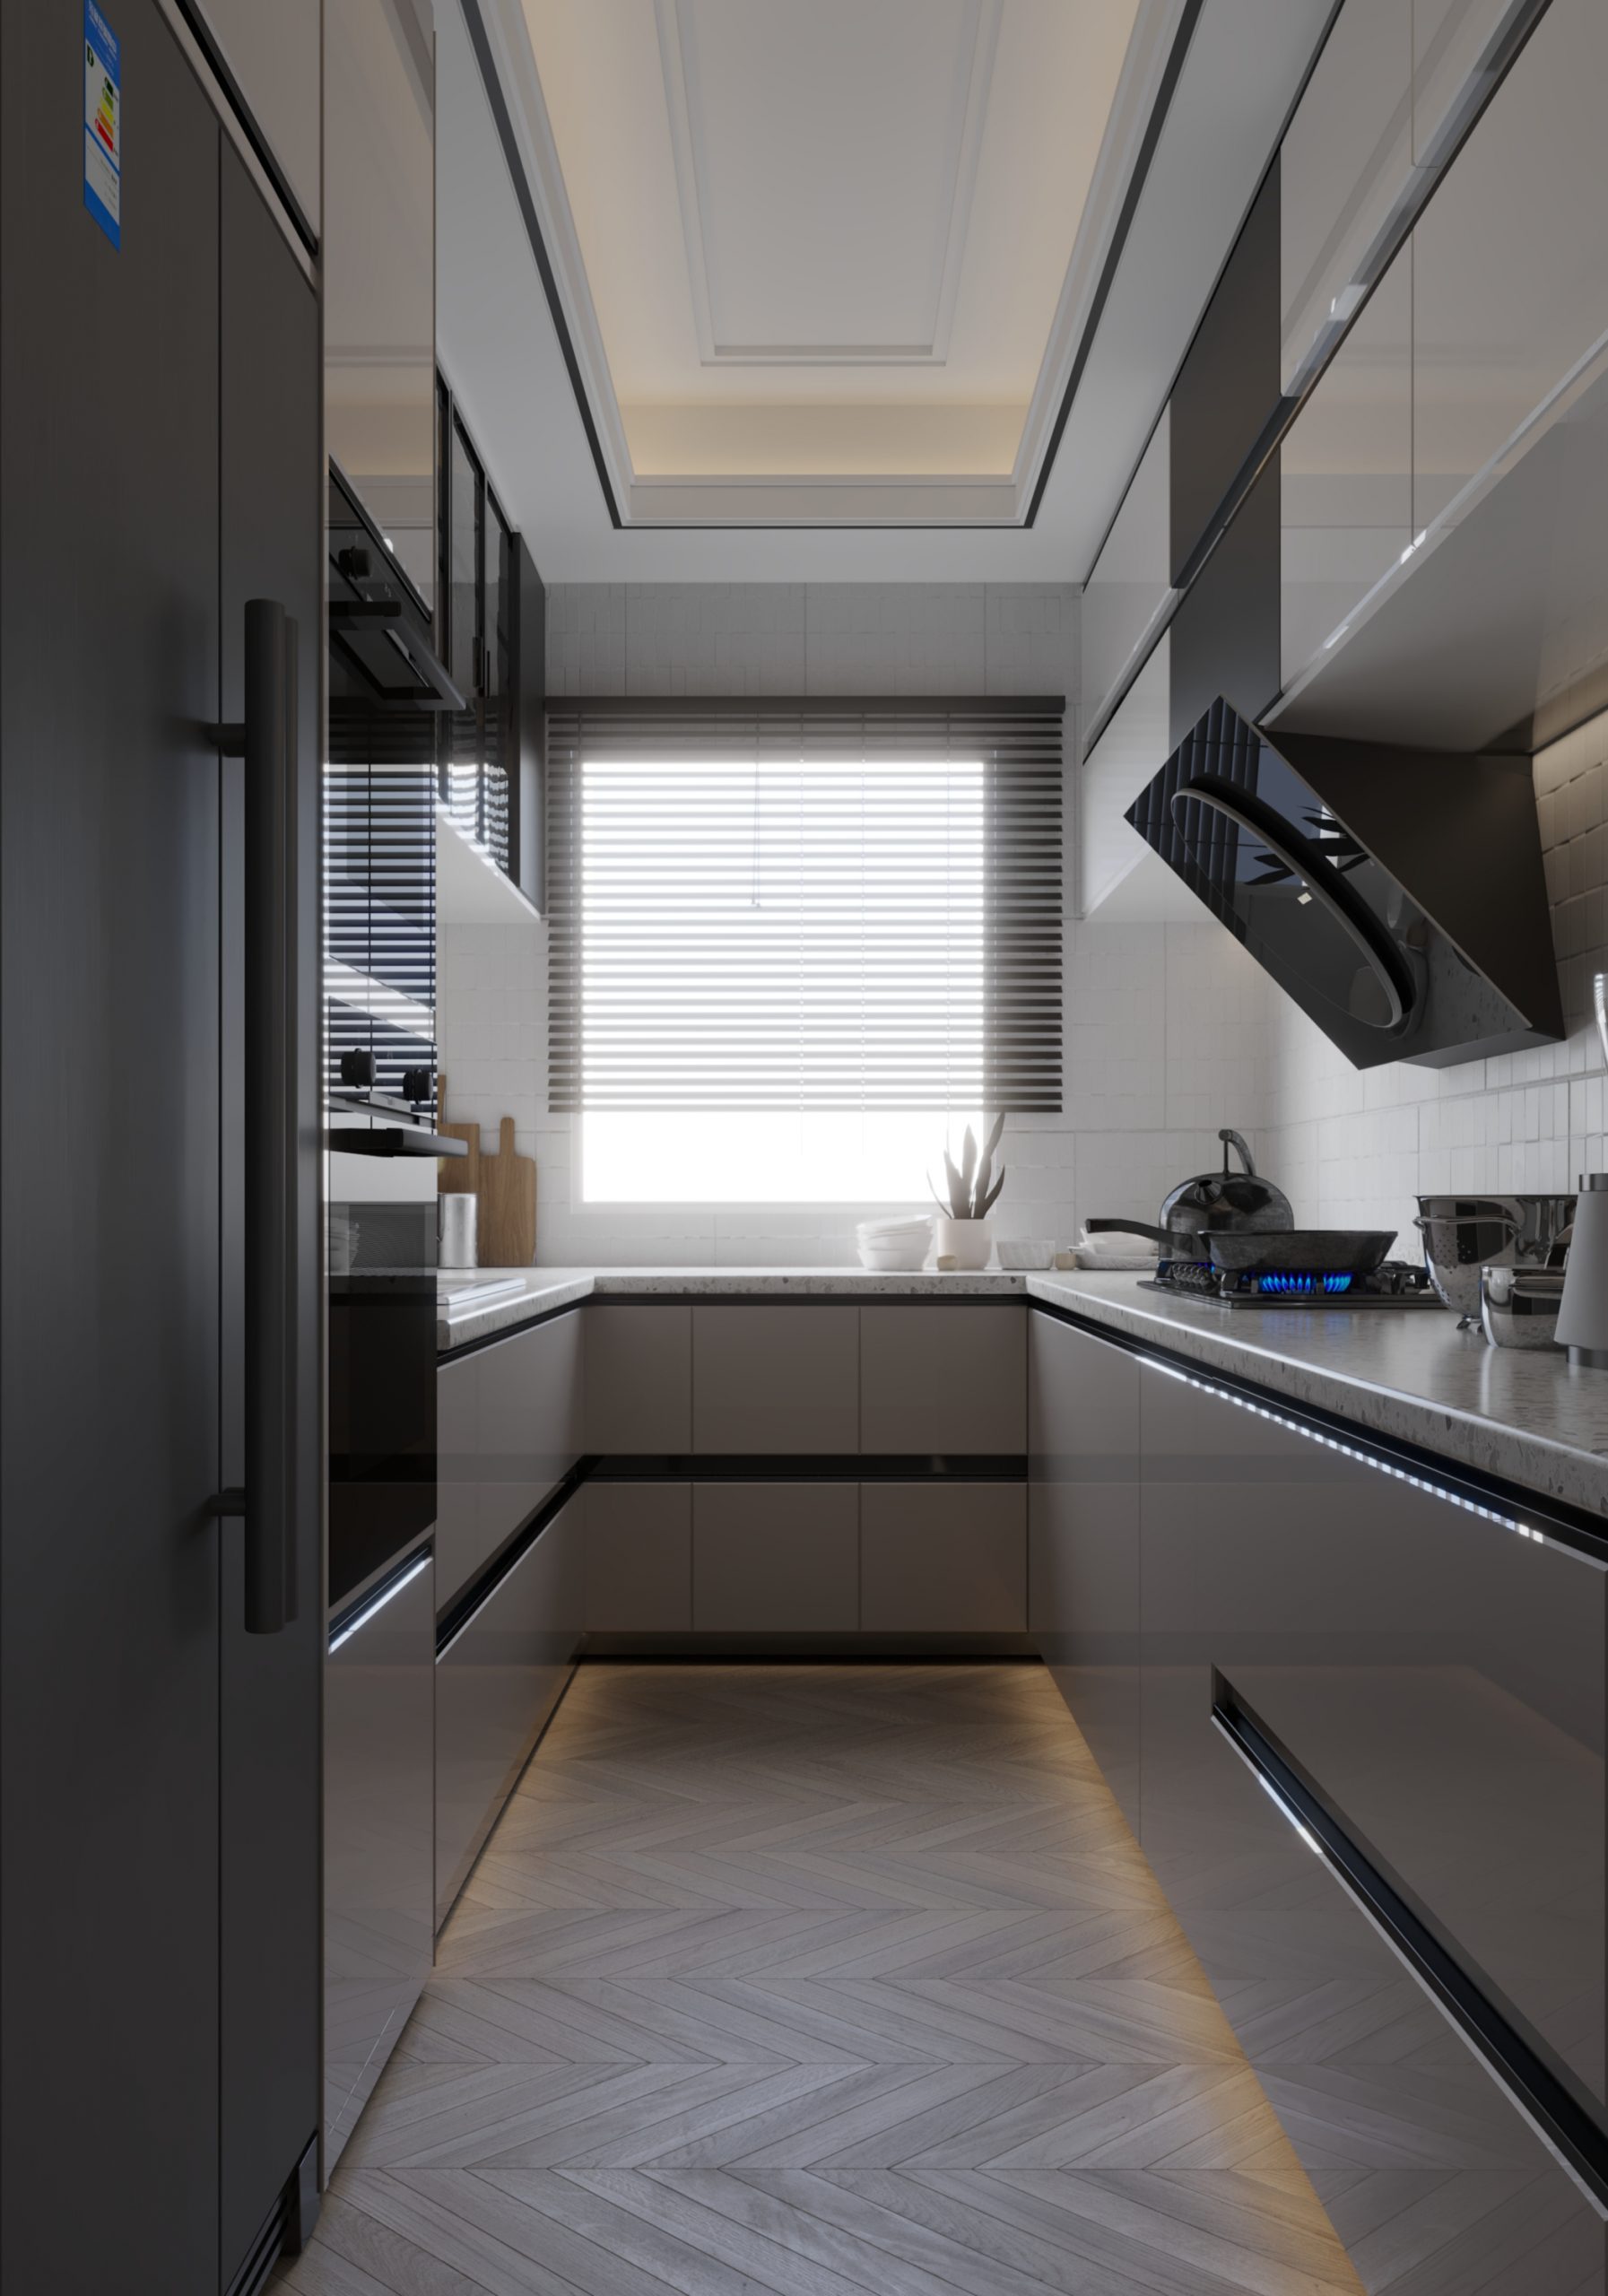 FULL HOUSE DESIGN - kitchen design - elegant kitchen - render